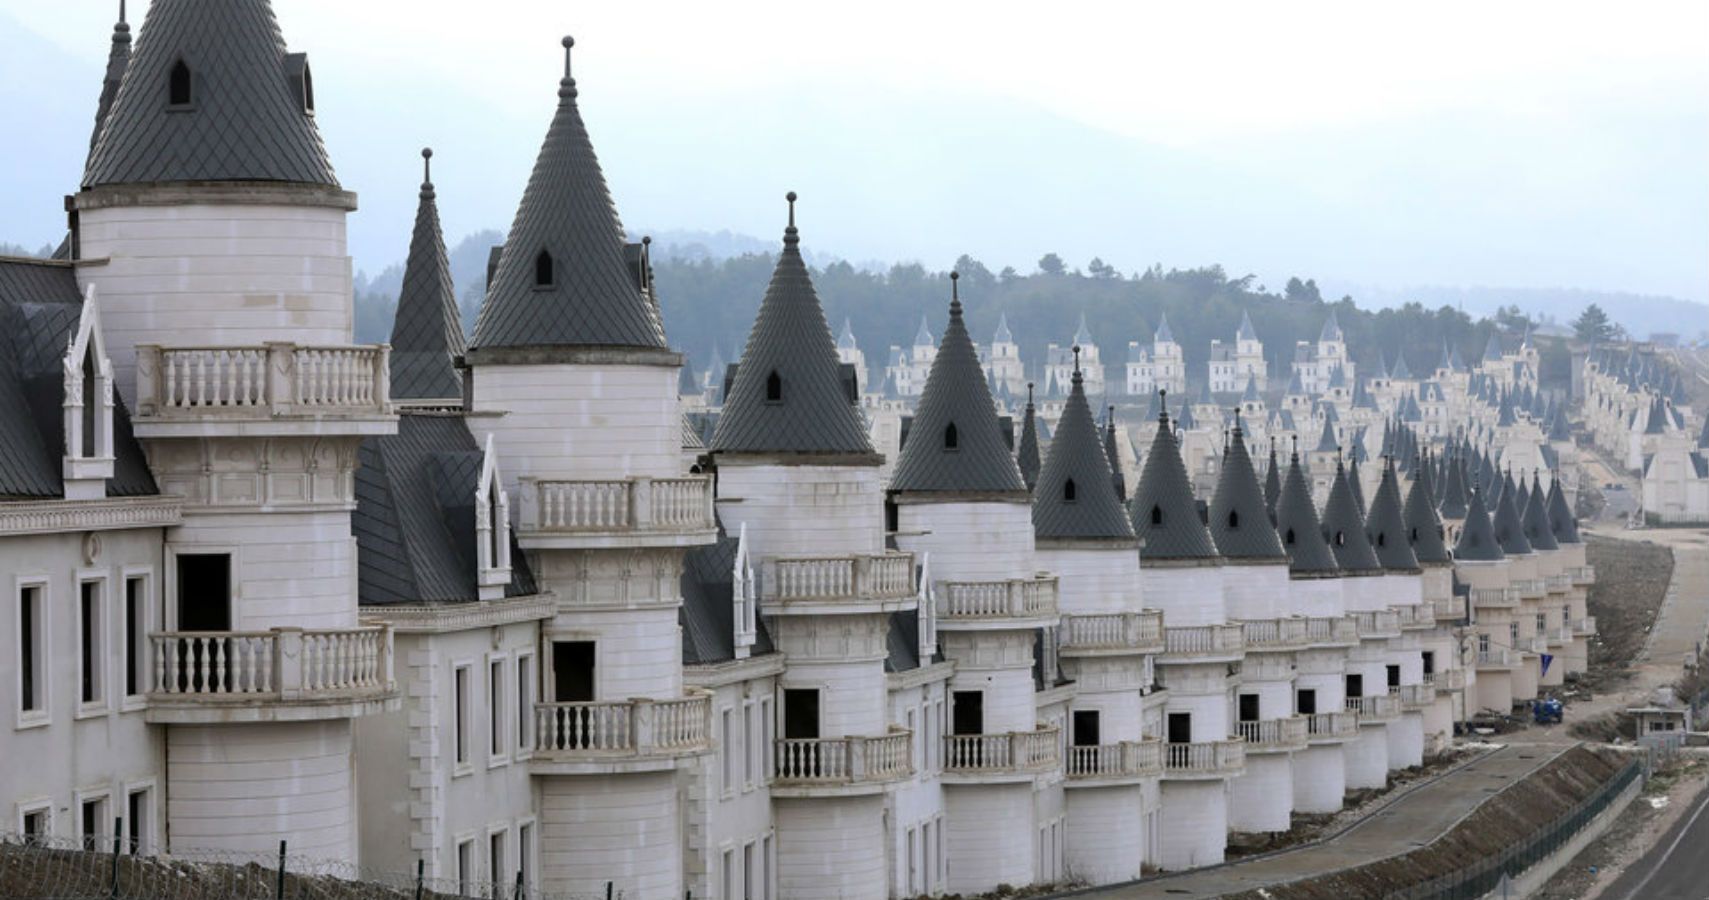 Esta cidade turca inteira de castelos no estilo Disney esta